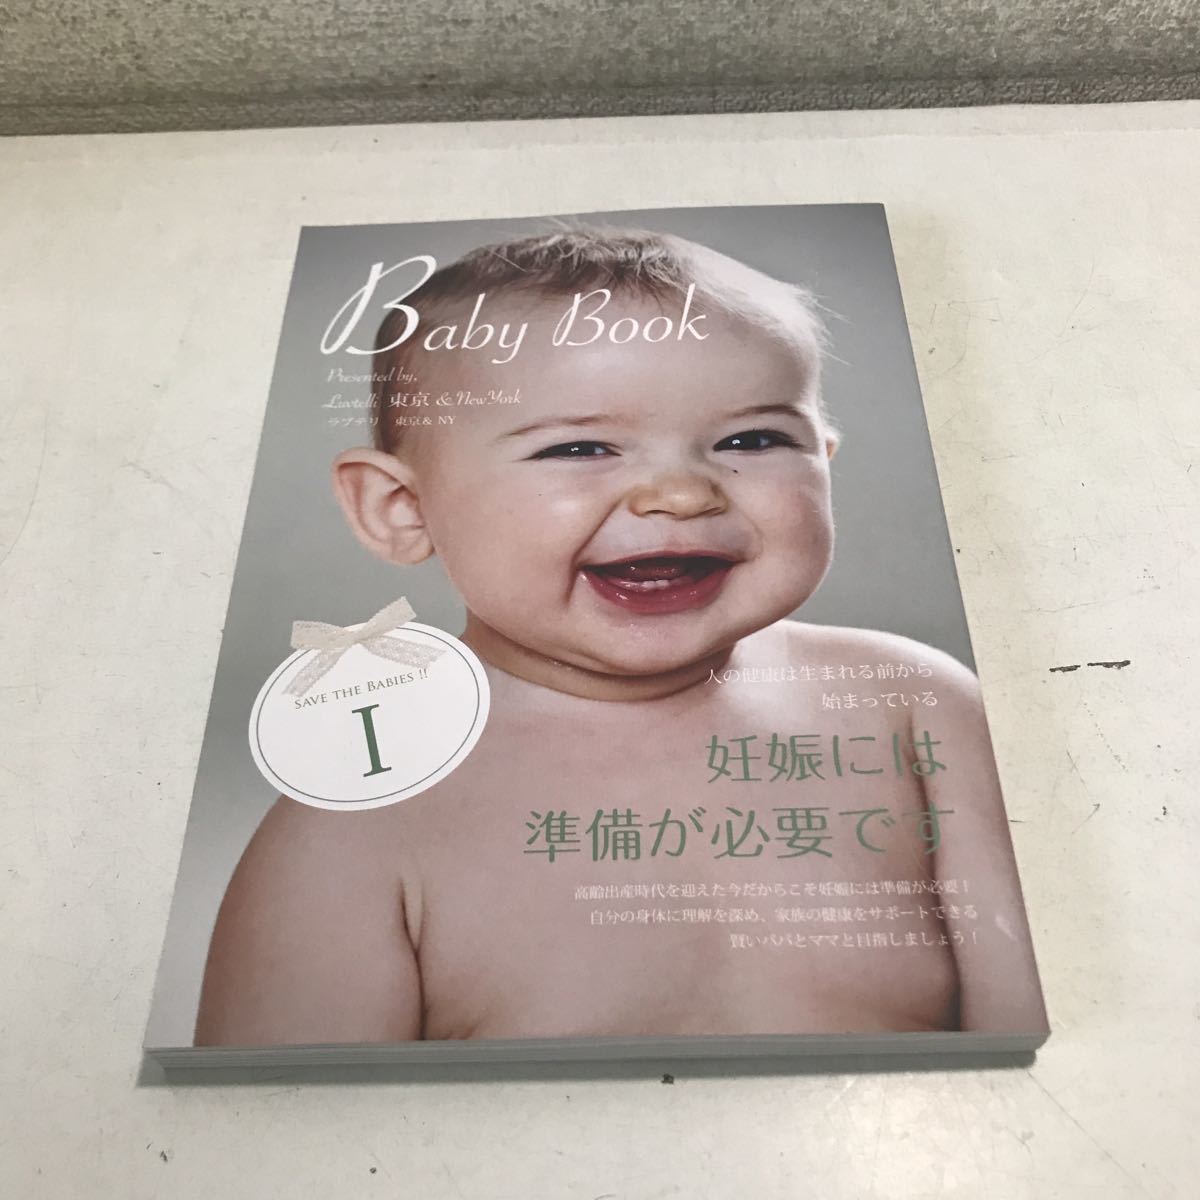 L03* Baby Book Rav teliLuvtelli 1 Tokyo &New York small river Momo / plan etc. pregnancy - preparation is necessary beautiful book@*230530